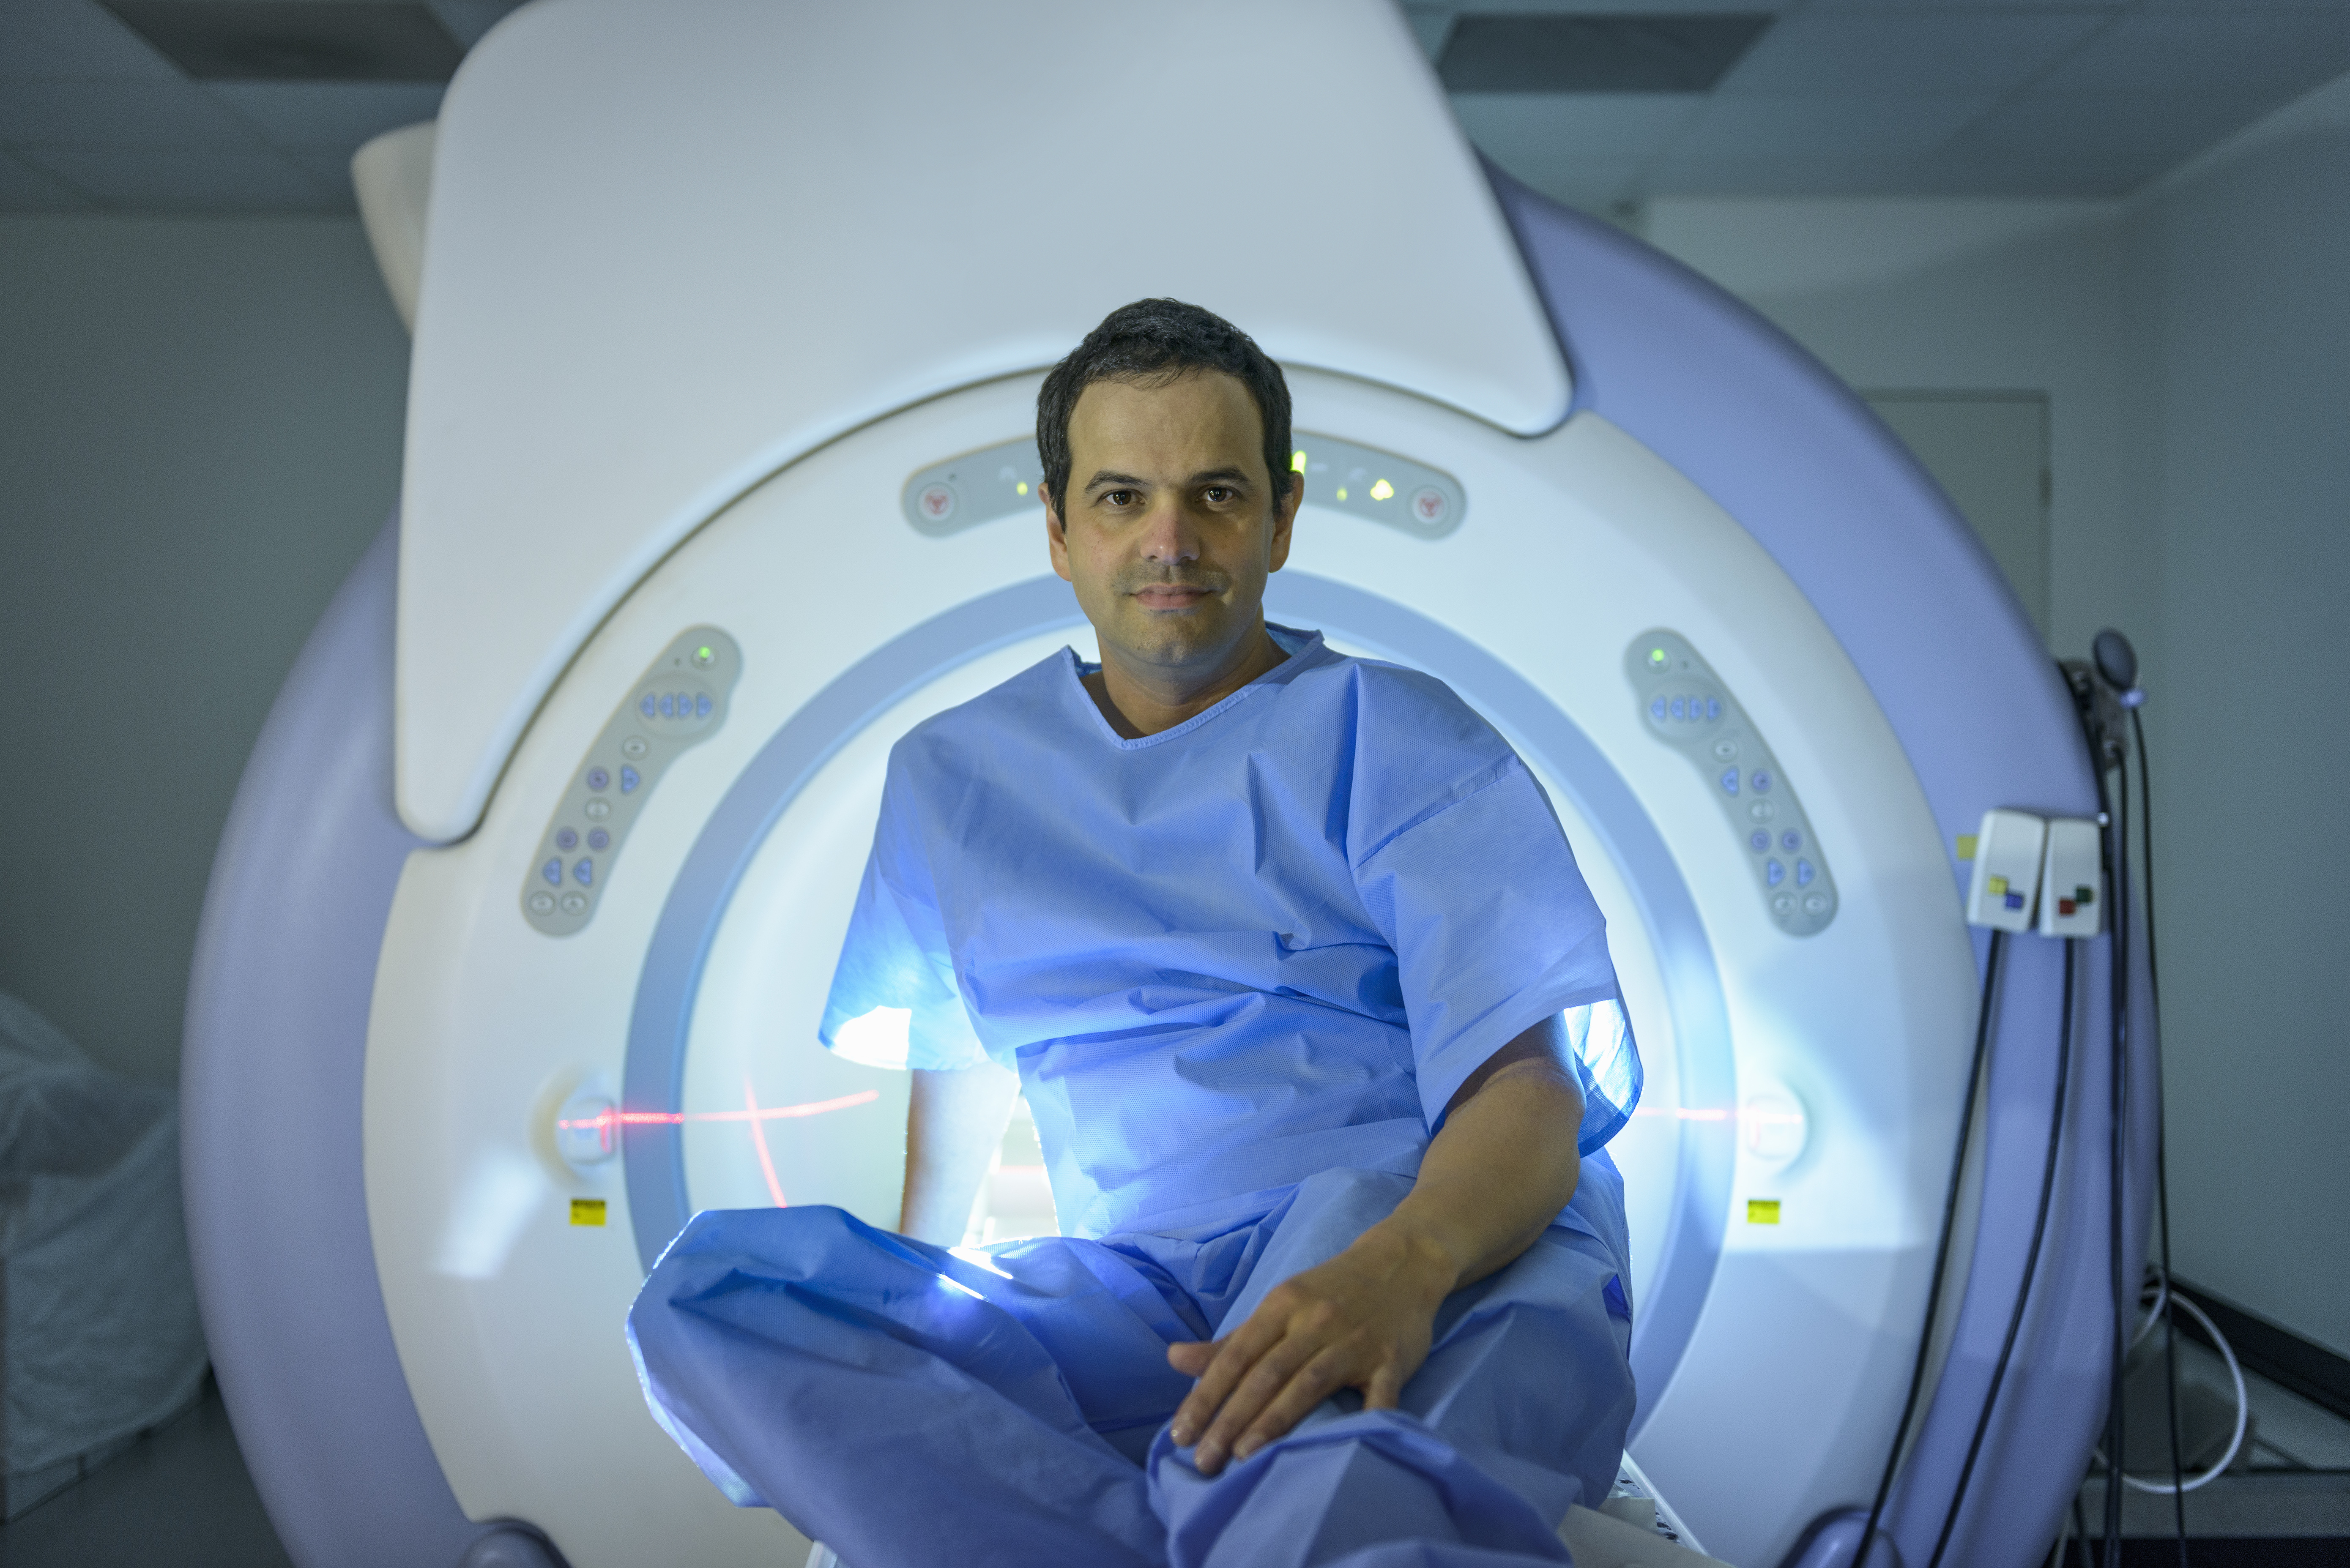 Patient sitting on Magnetic Resonance Imaging (MRI) scanner, portrait